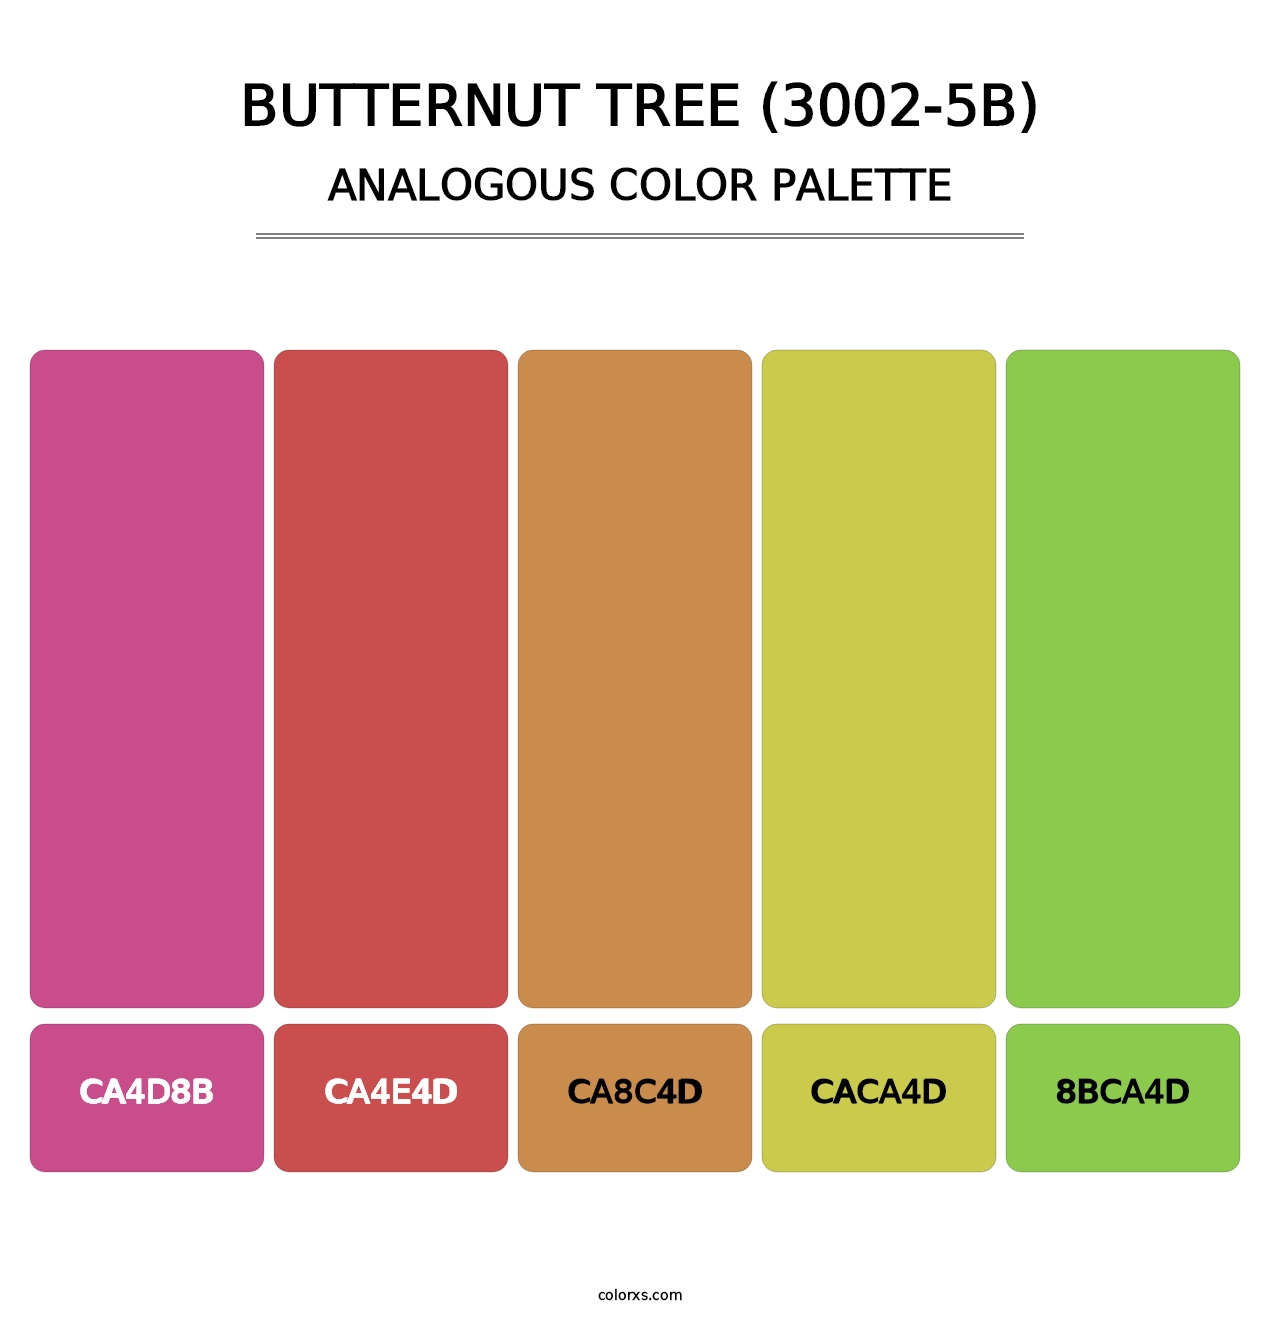 Butternut Tree (3002-5B) - Analogous Color Palette